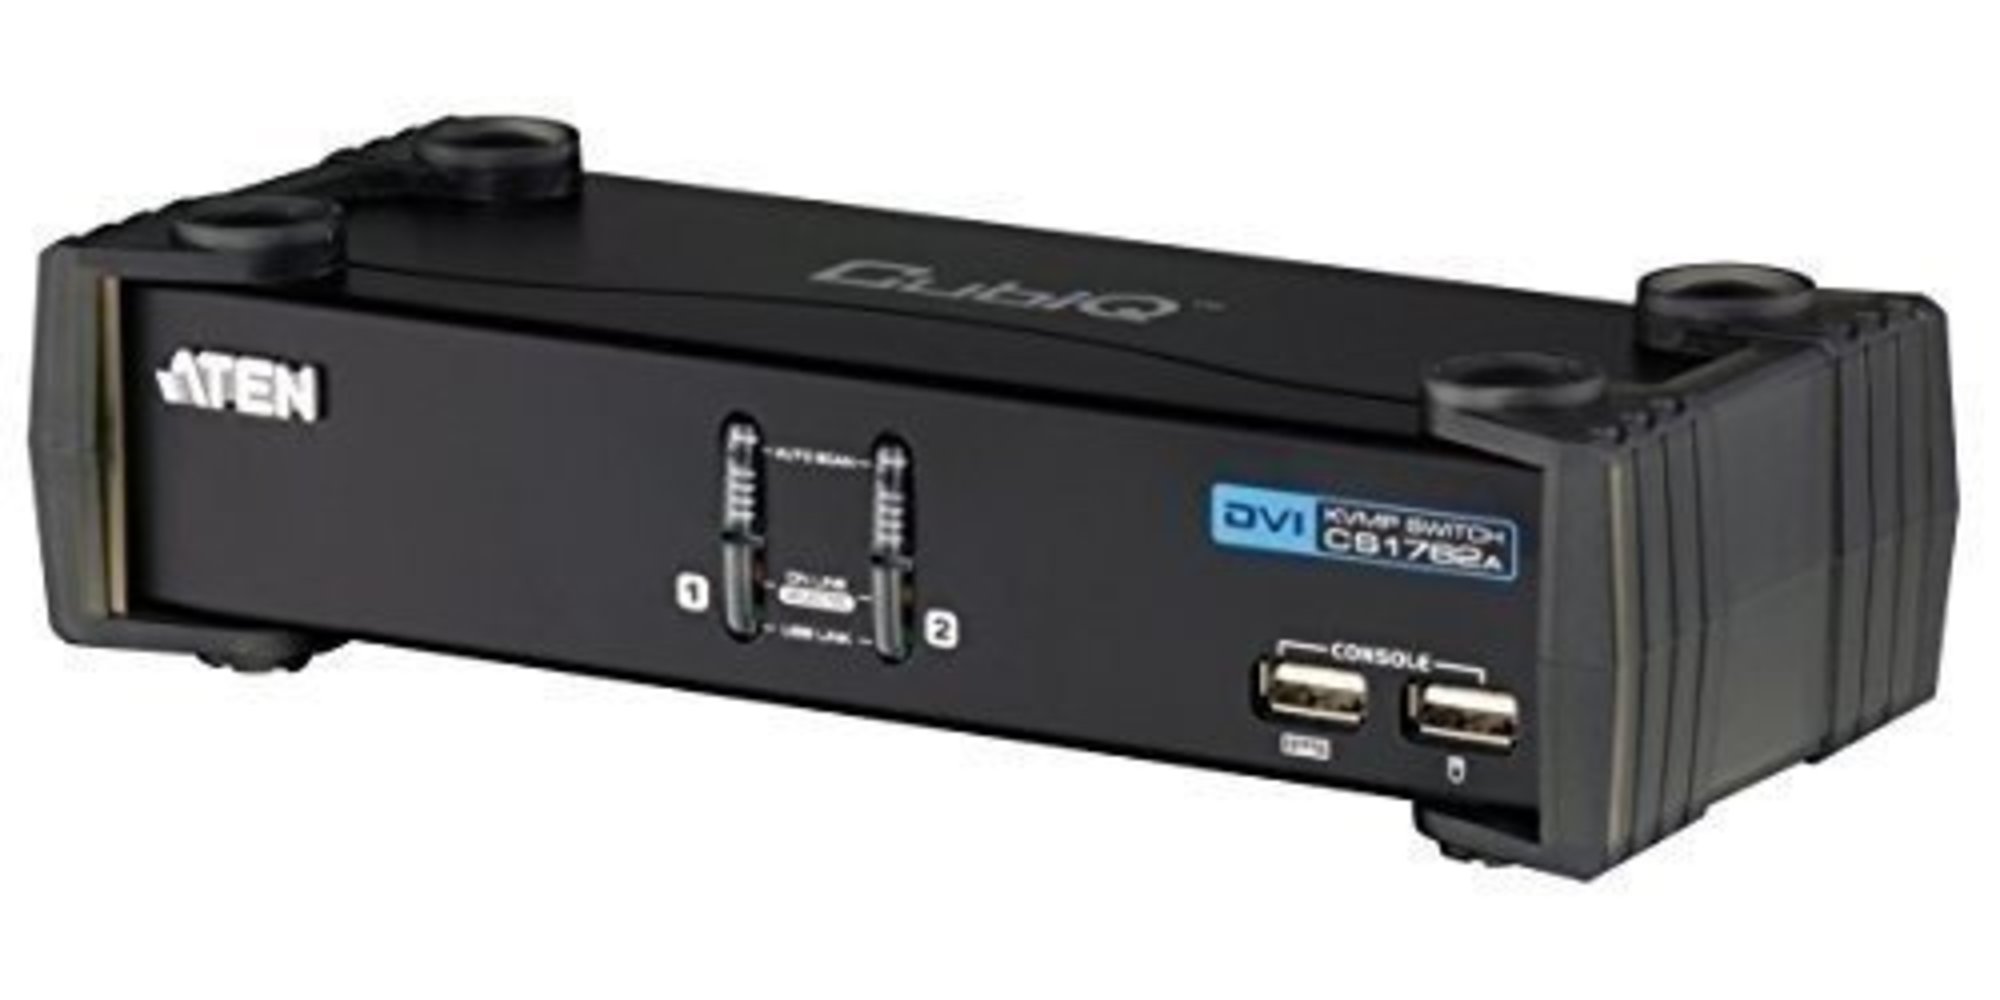 KVMP Switch ATEN 2-fach CubiQ CS1762A DVI USB Audio